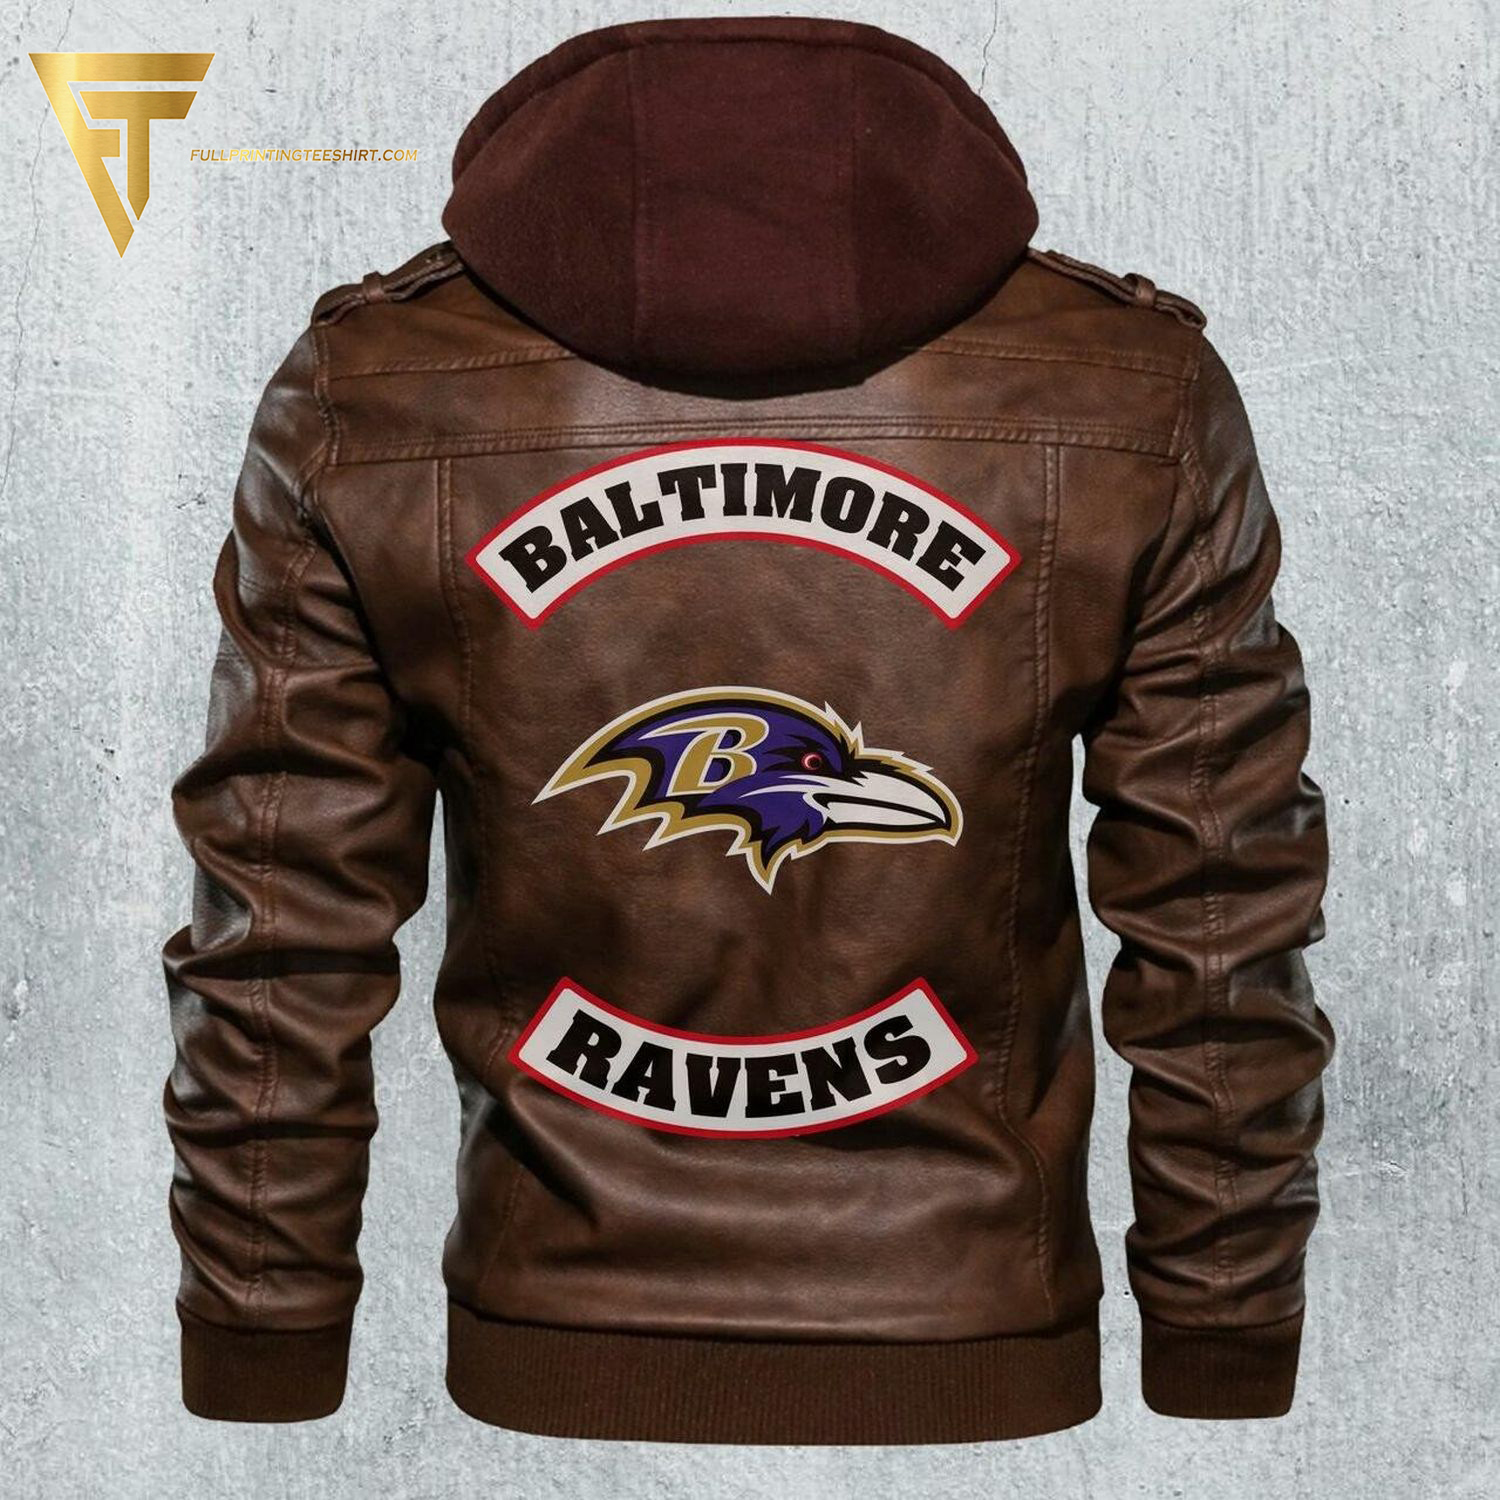 NFL Baltimore Ravens Football Team Leather Jacket